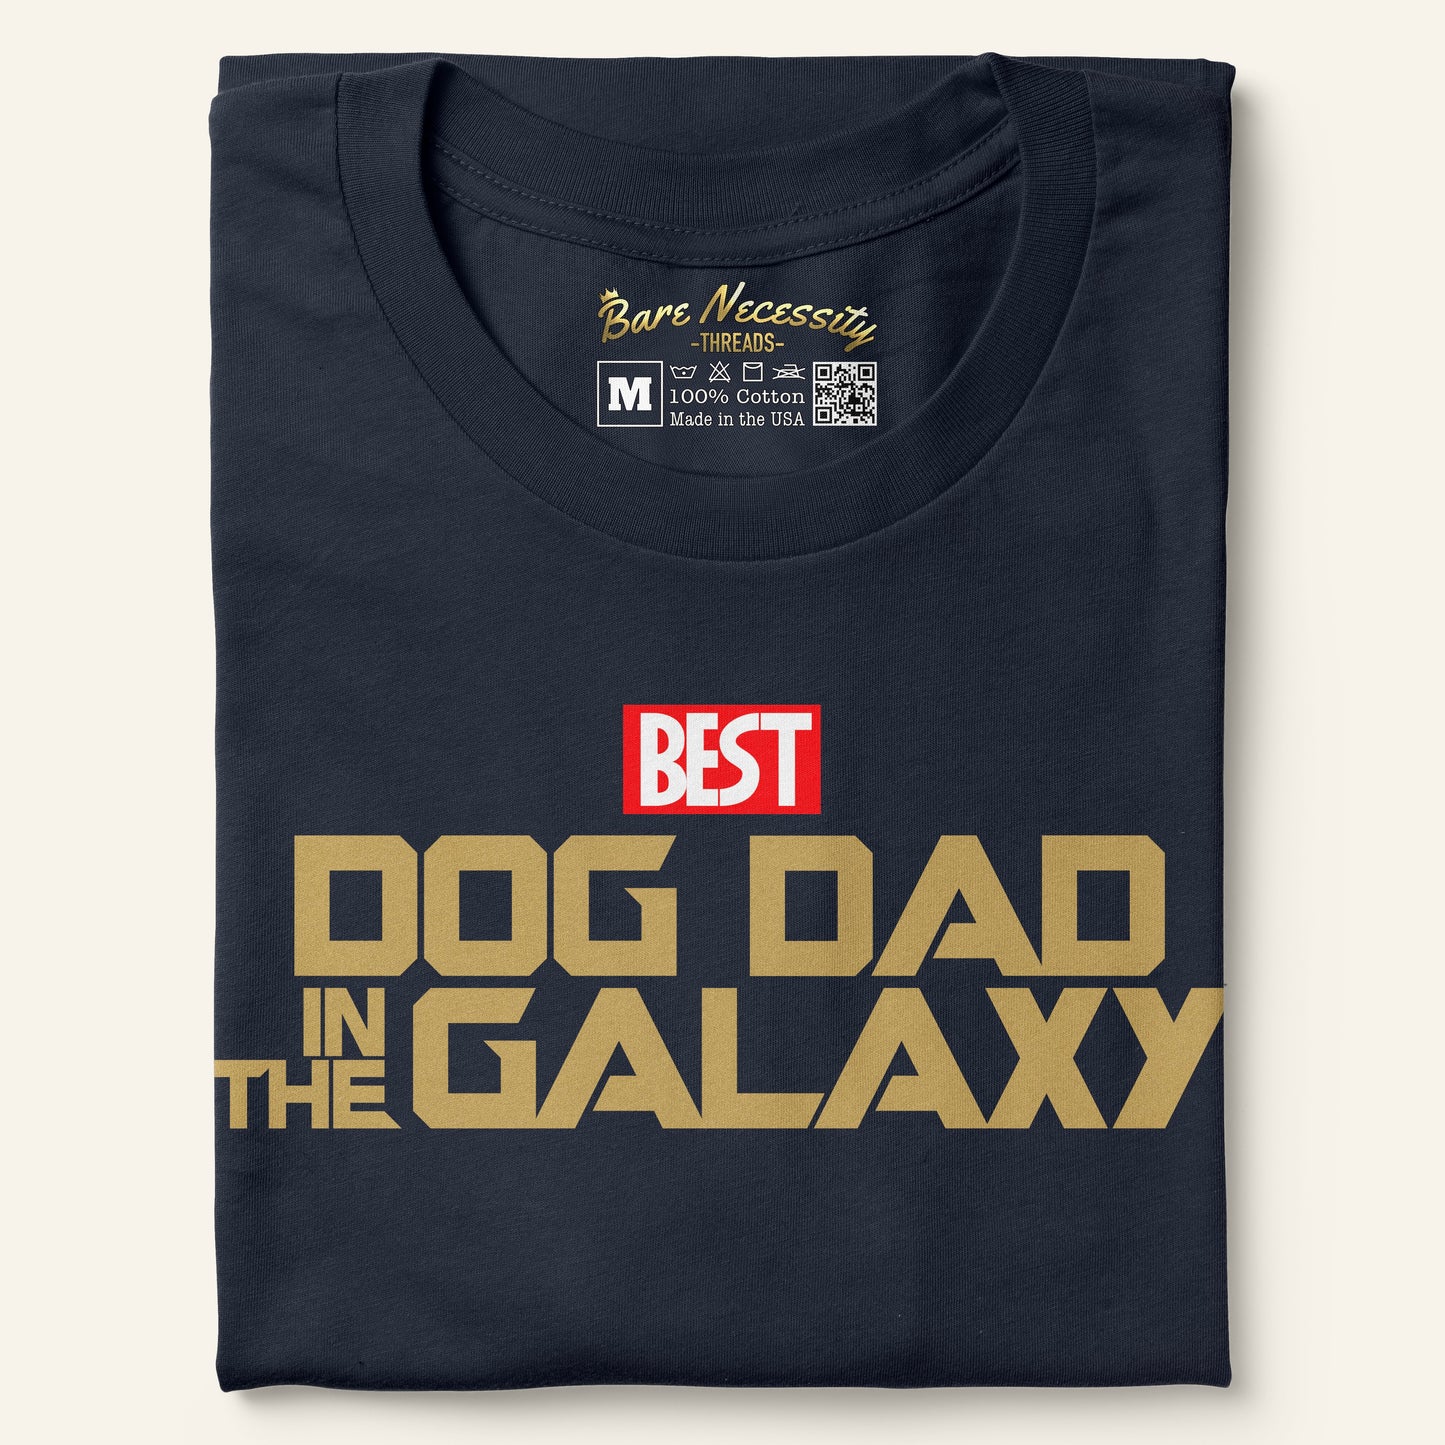 Best Dog Dad In The Galaxy Shirt